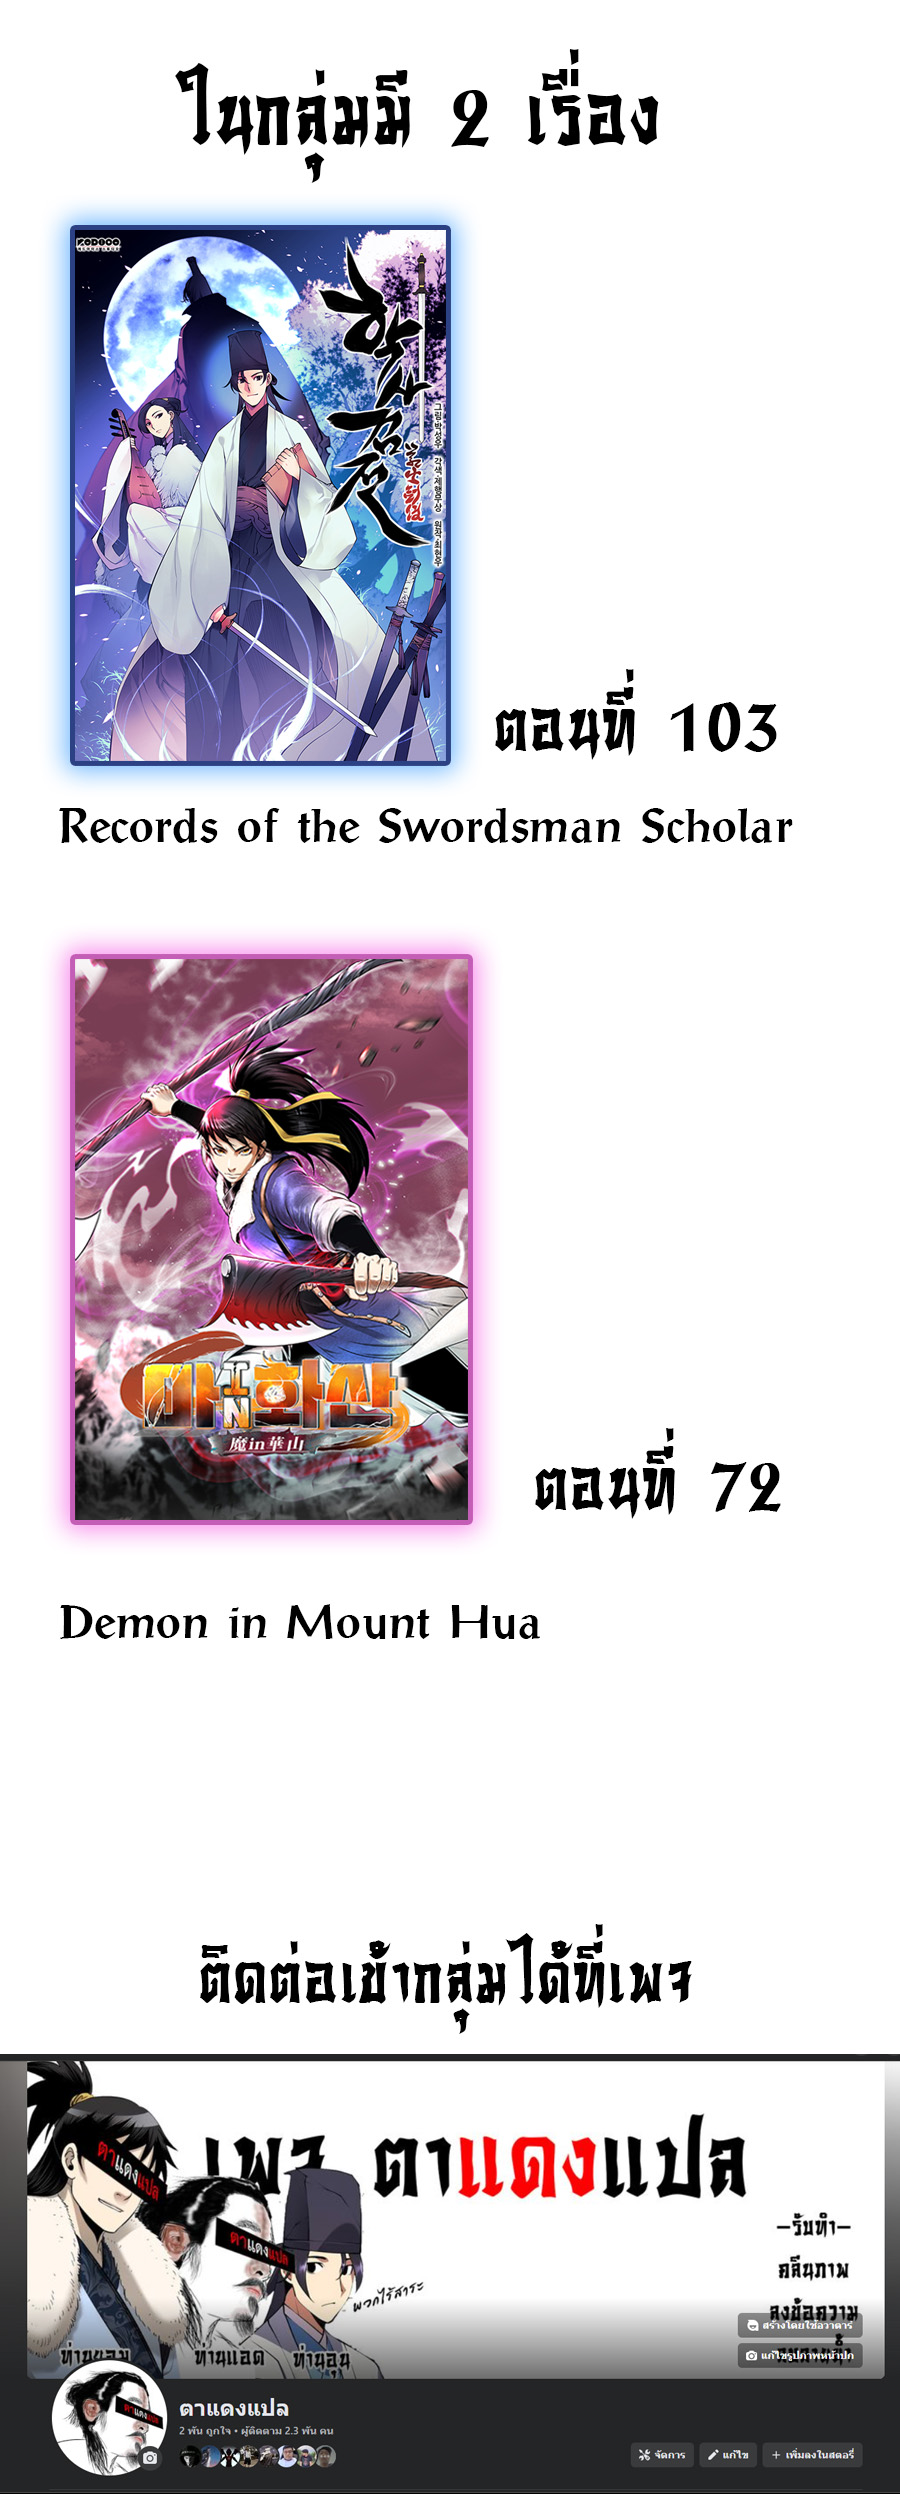 Records of the Swordsman Scholar 83 (19)